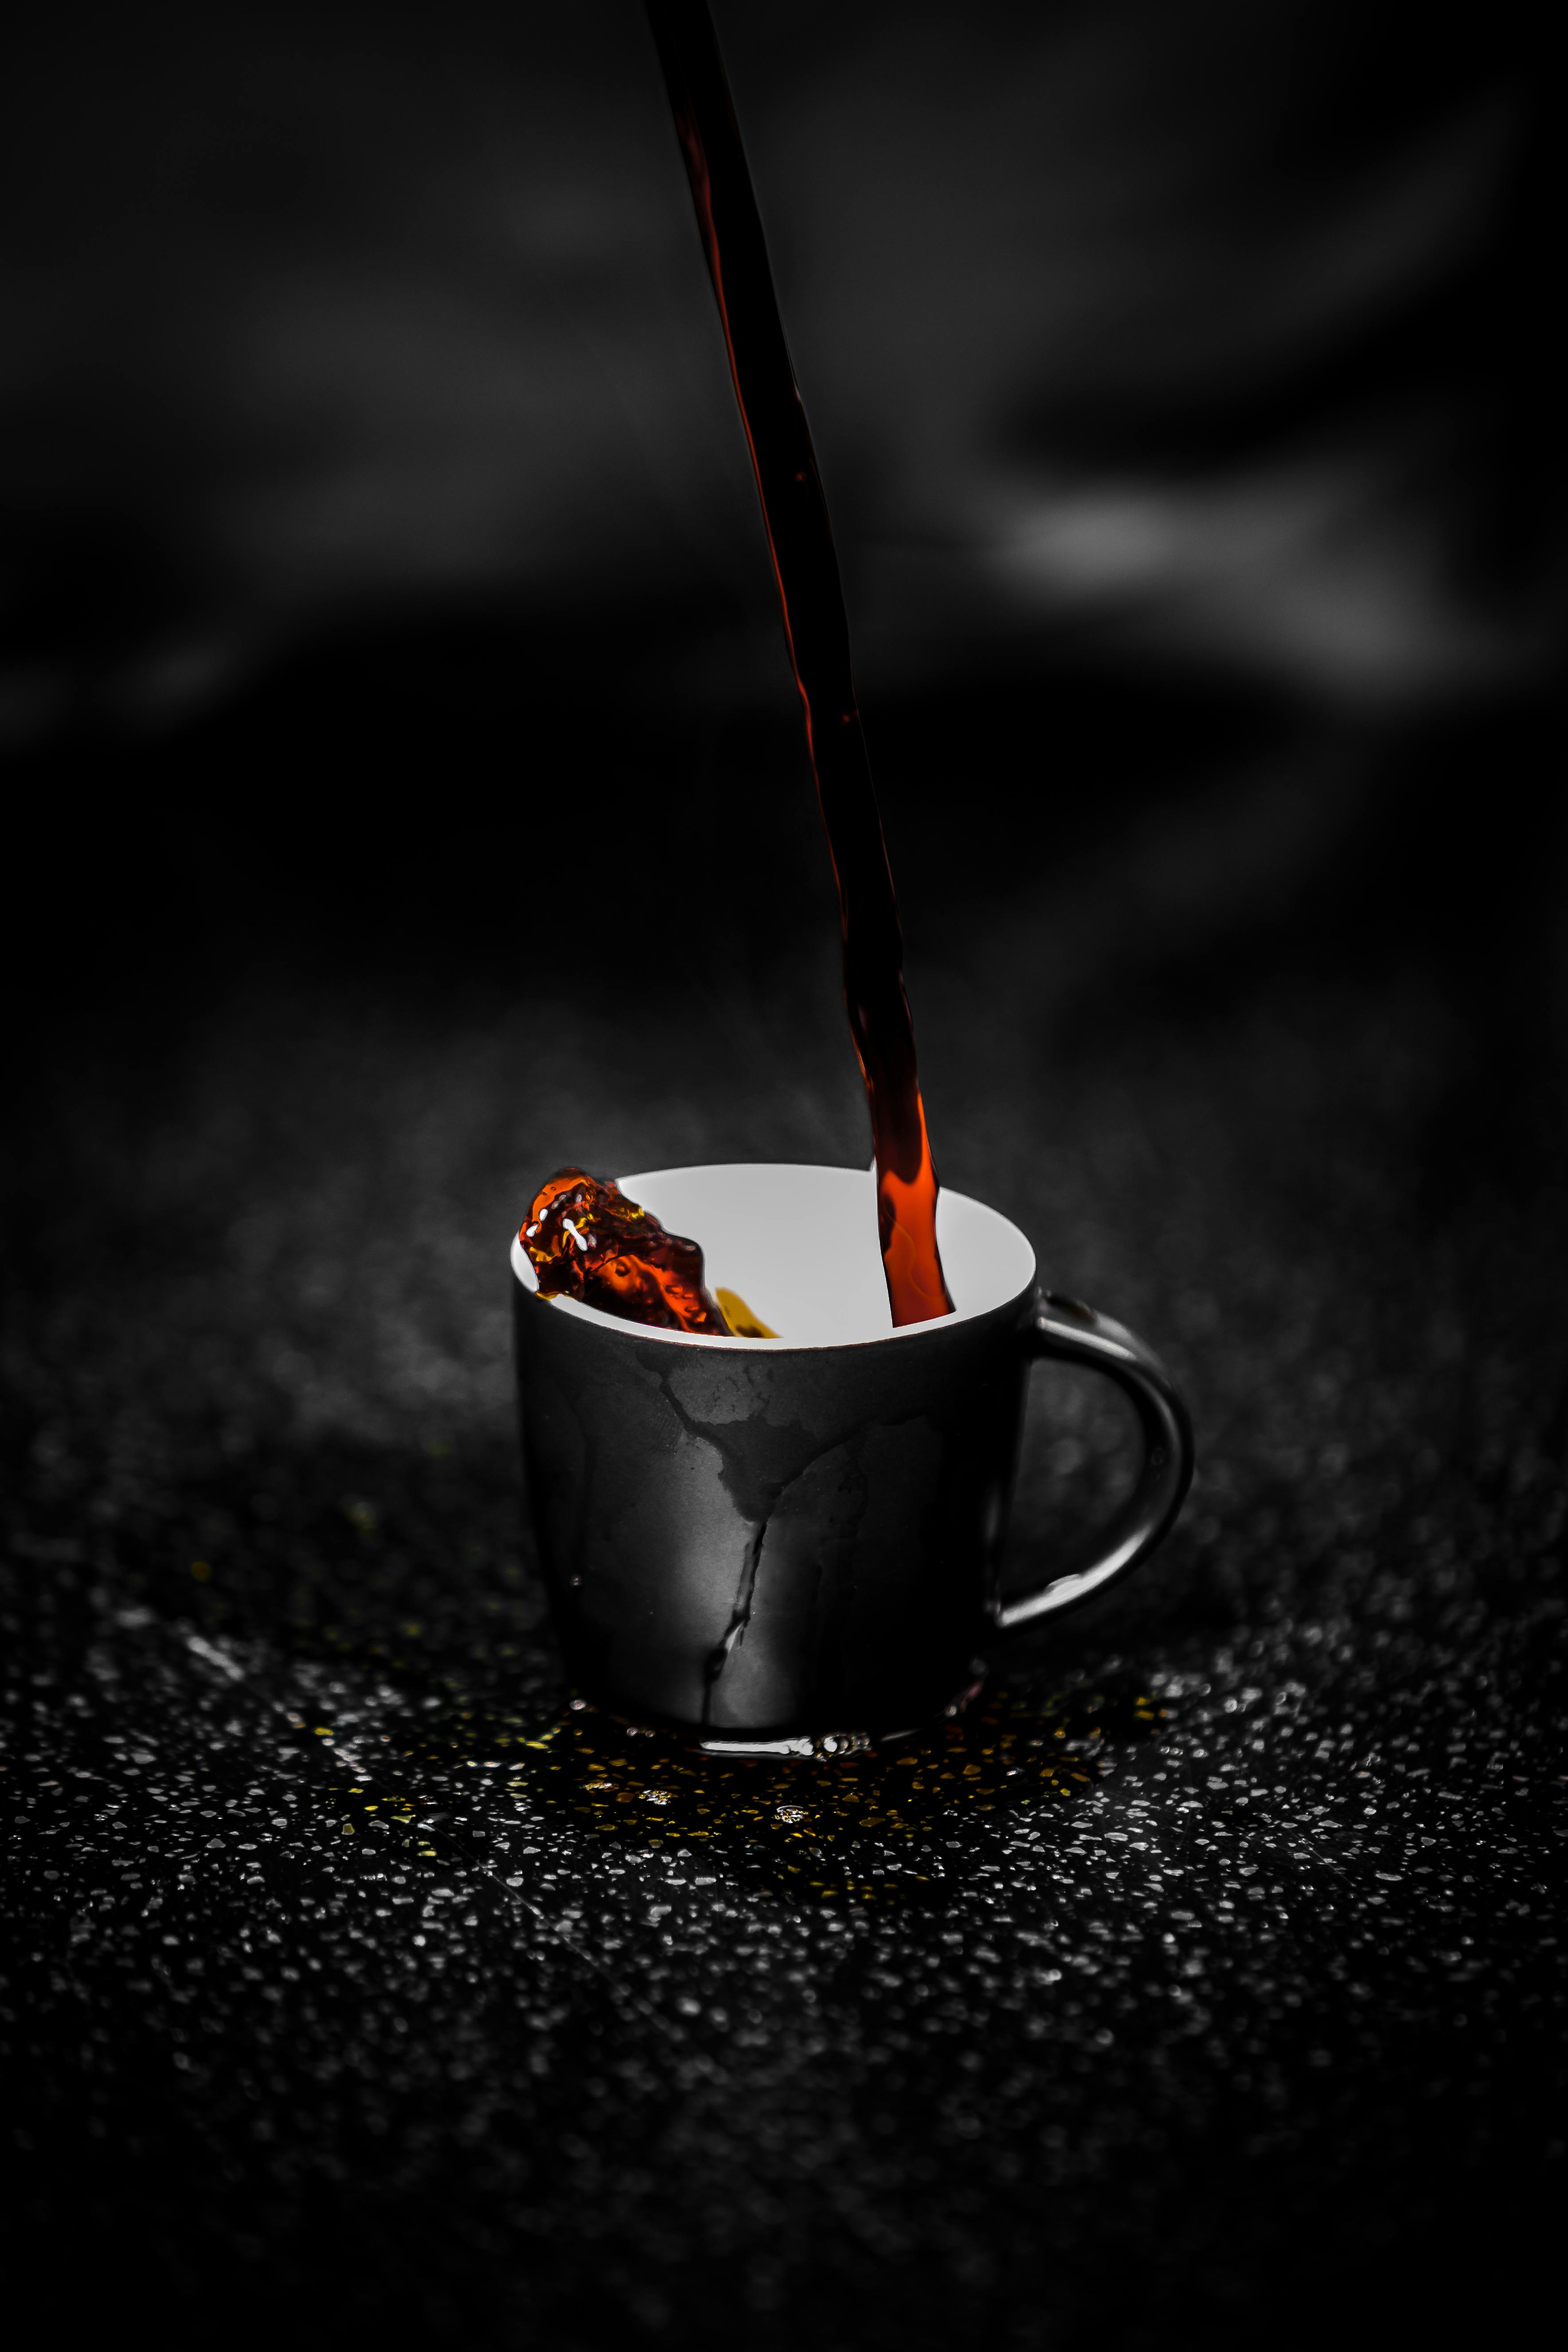 Stylish Coffee Pics: 10,000+ Free HD Images of Coffee, Coffee Cups